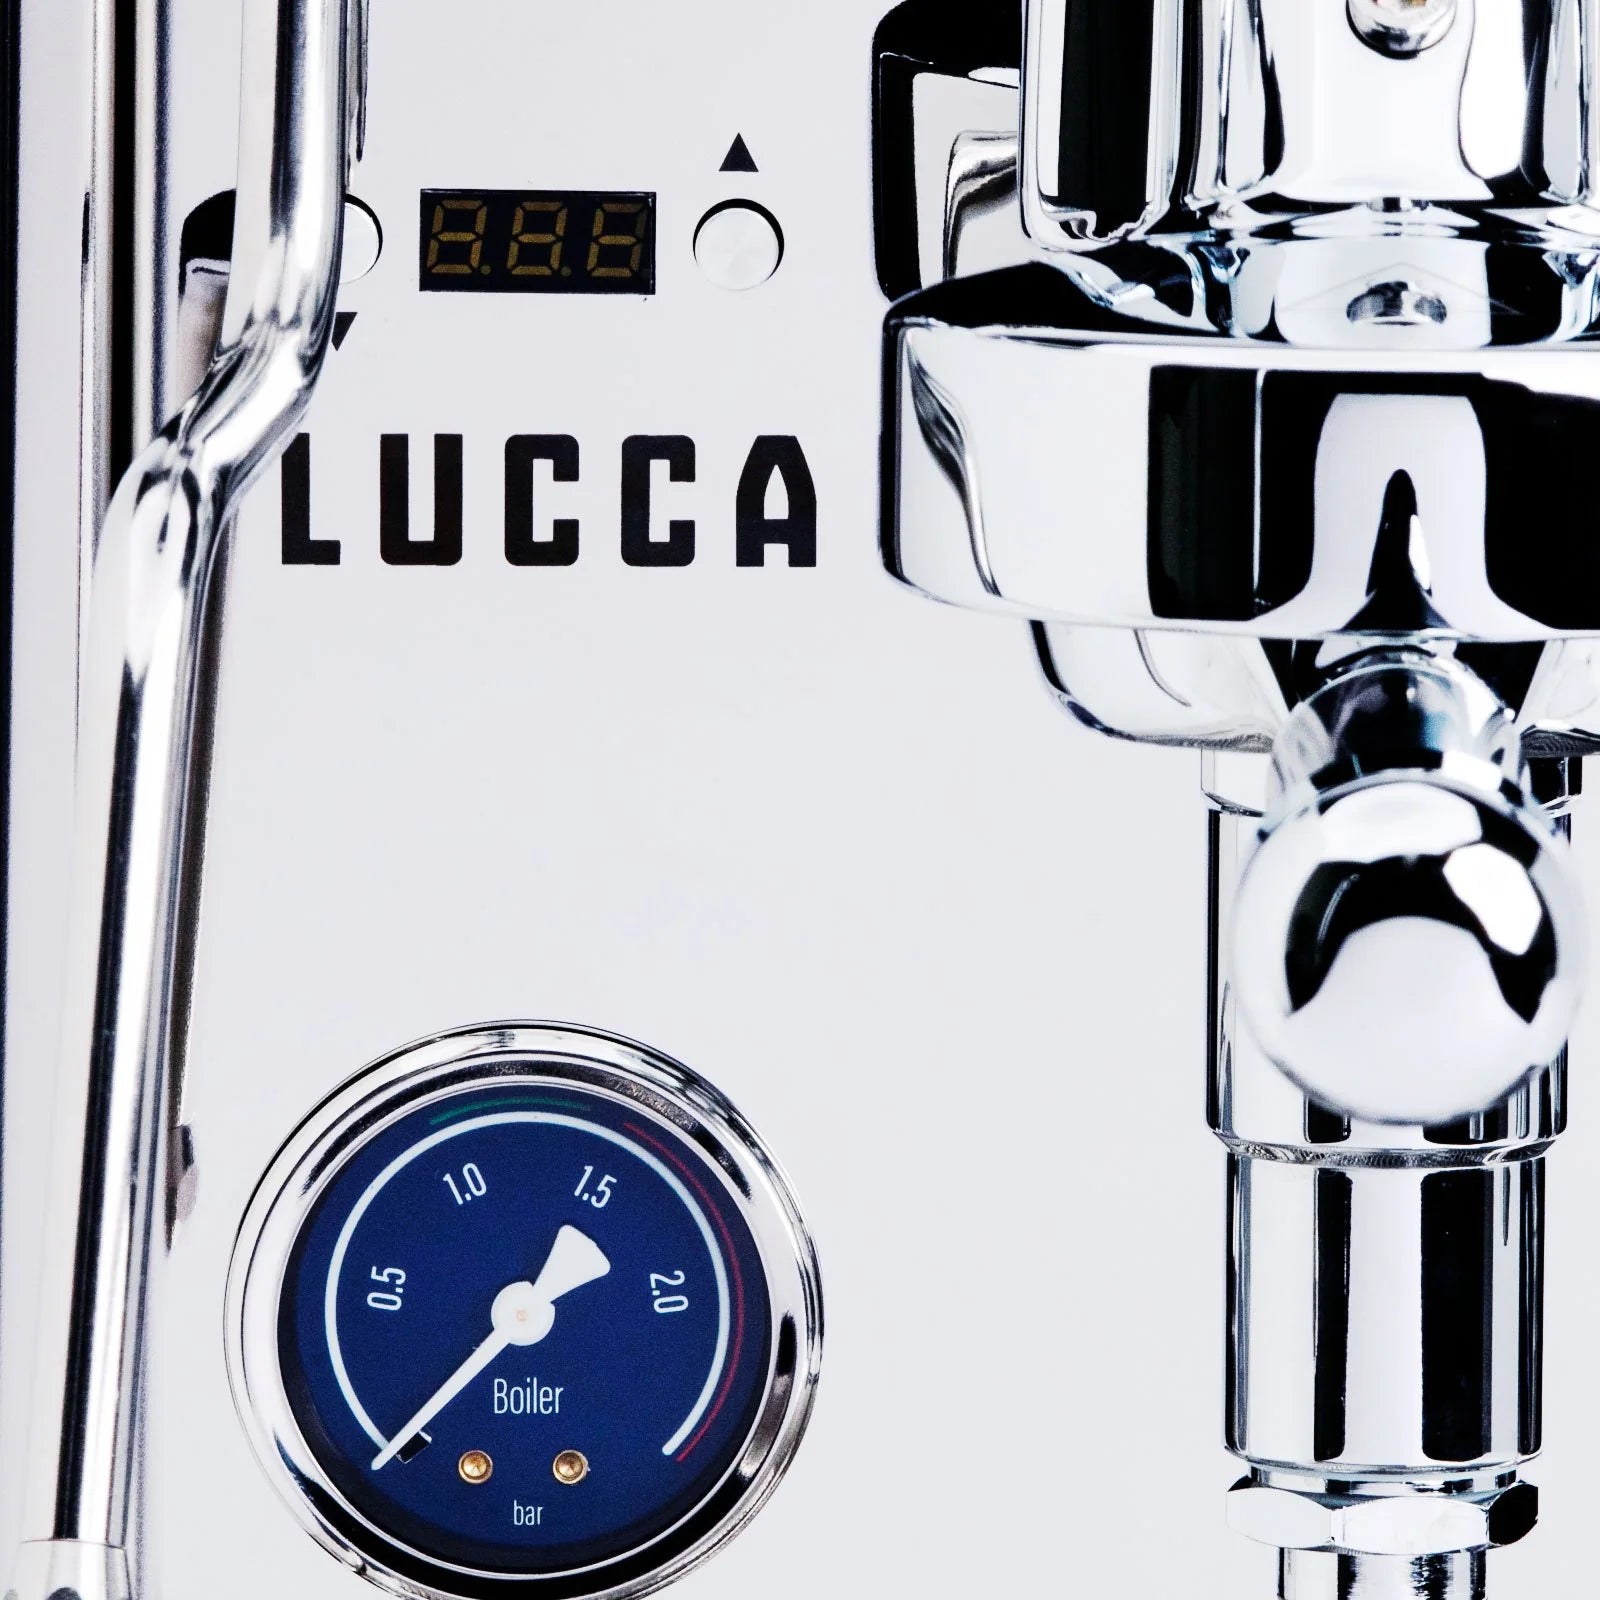 LUCCA X58 Home Espresso Machine